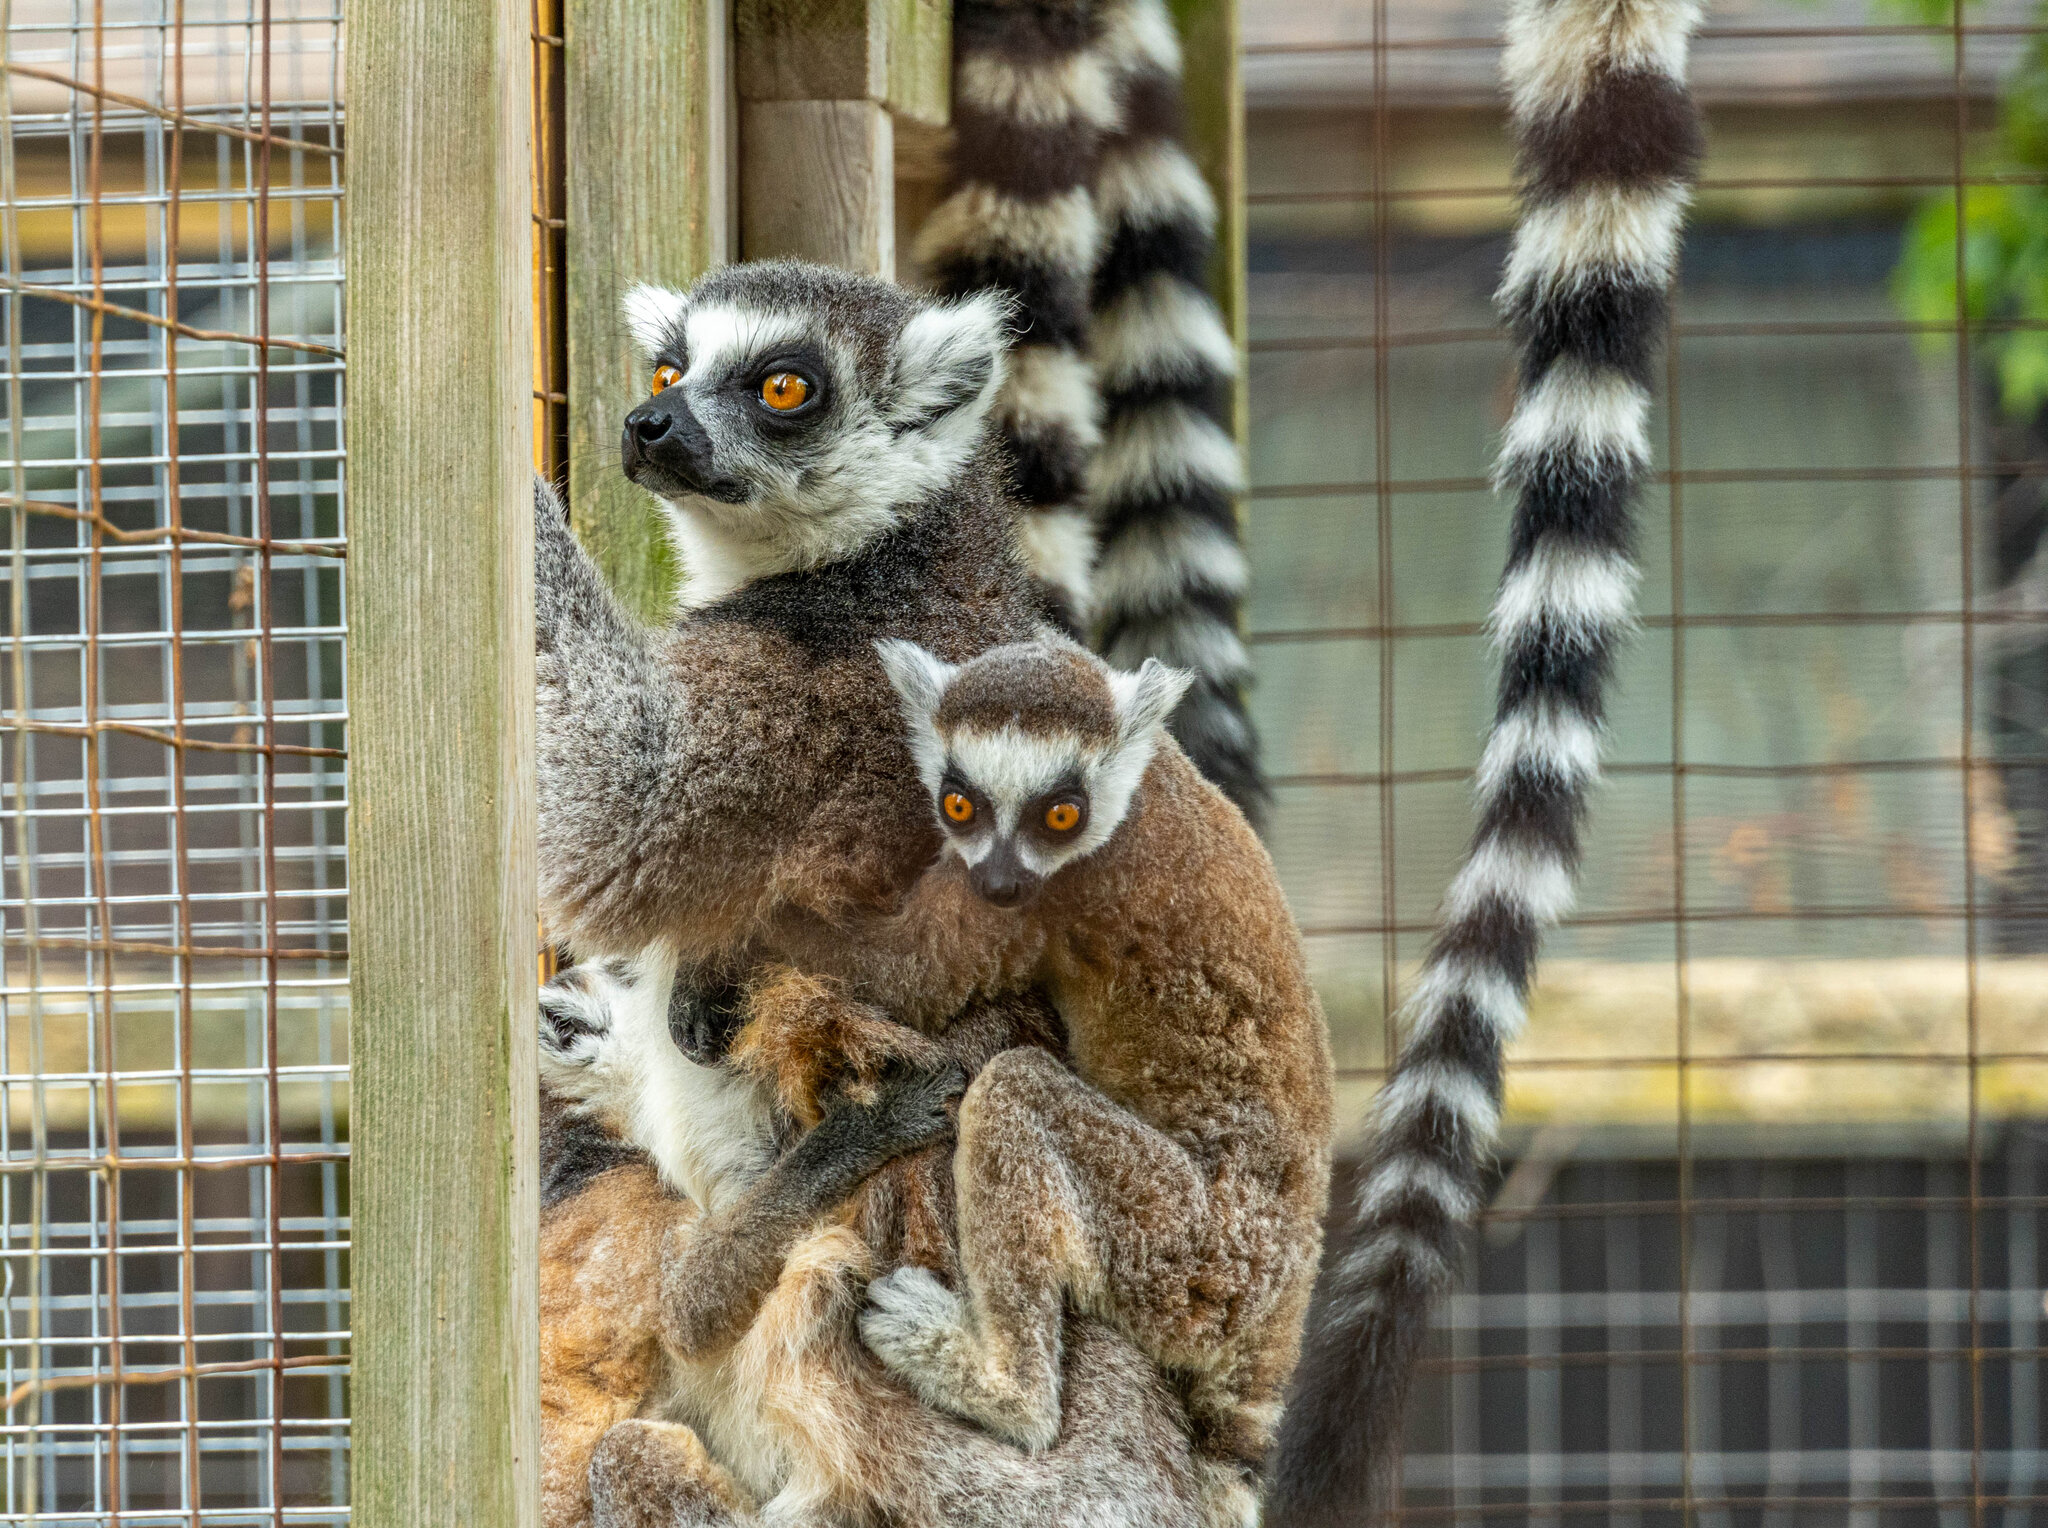 Lemur Mother & Baby